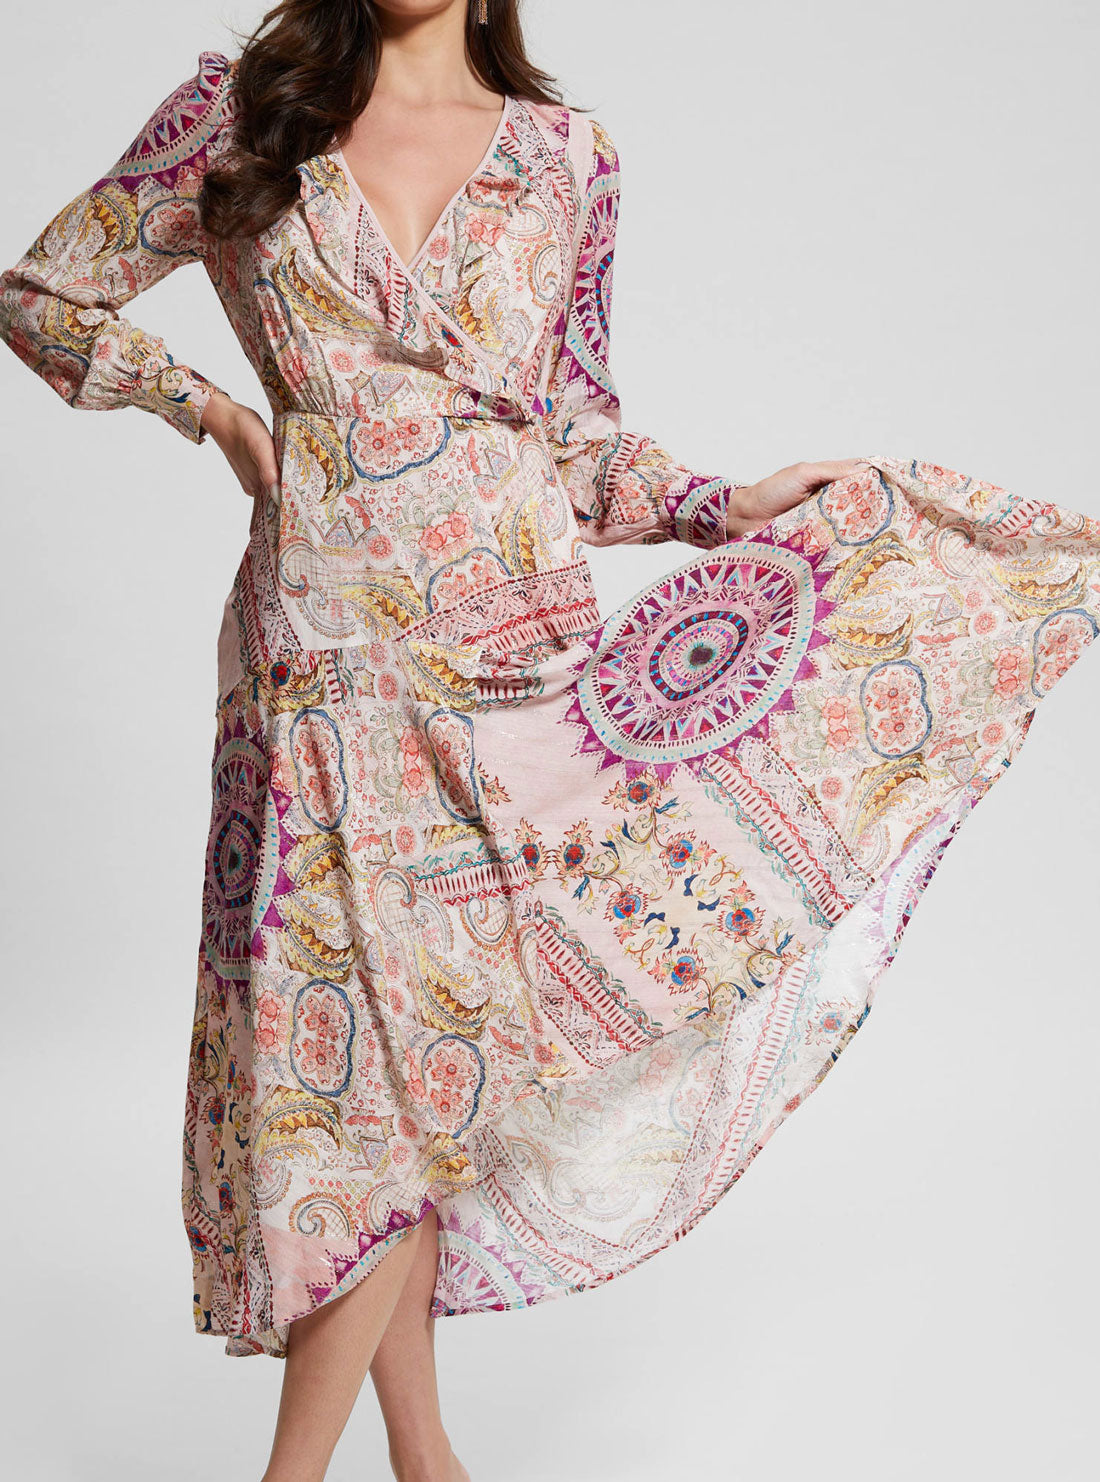 Monique Print Midi Dress | GUESS Women's Apparel | front view